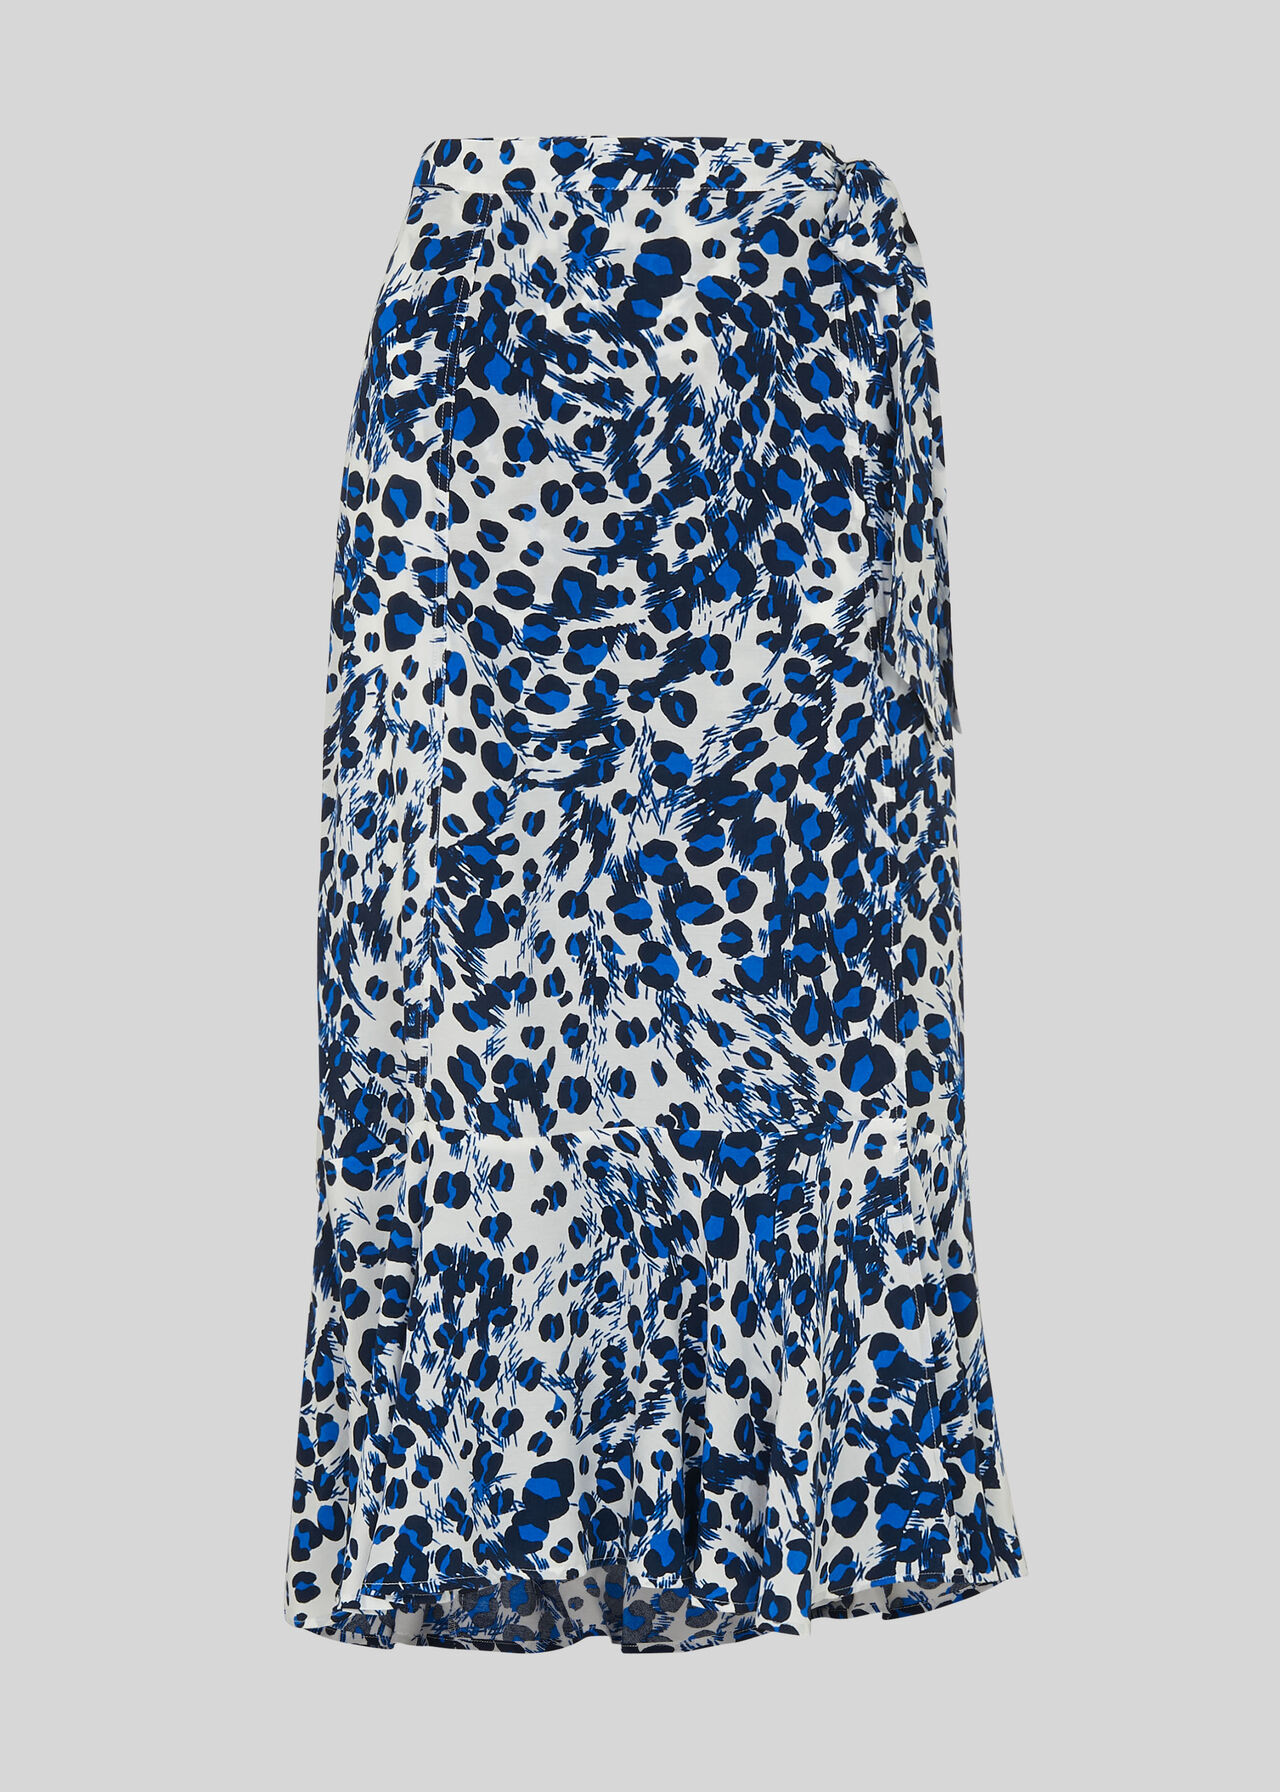 Brushed Leopard Wrap Skirt White/Multi